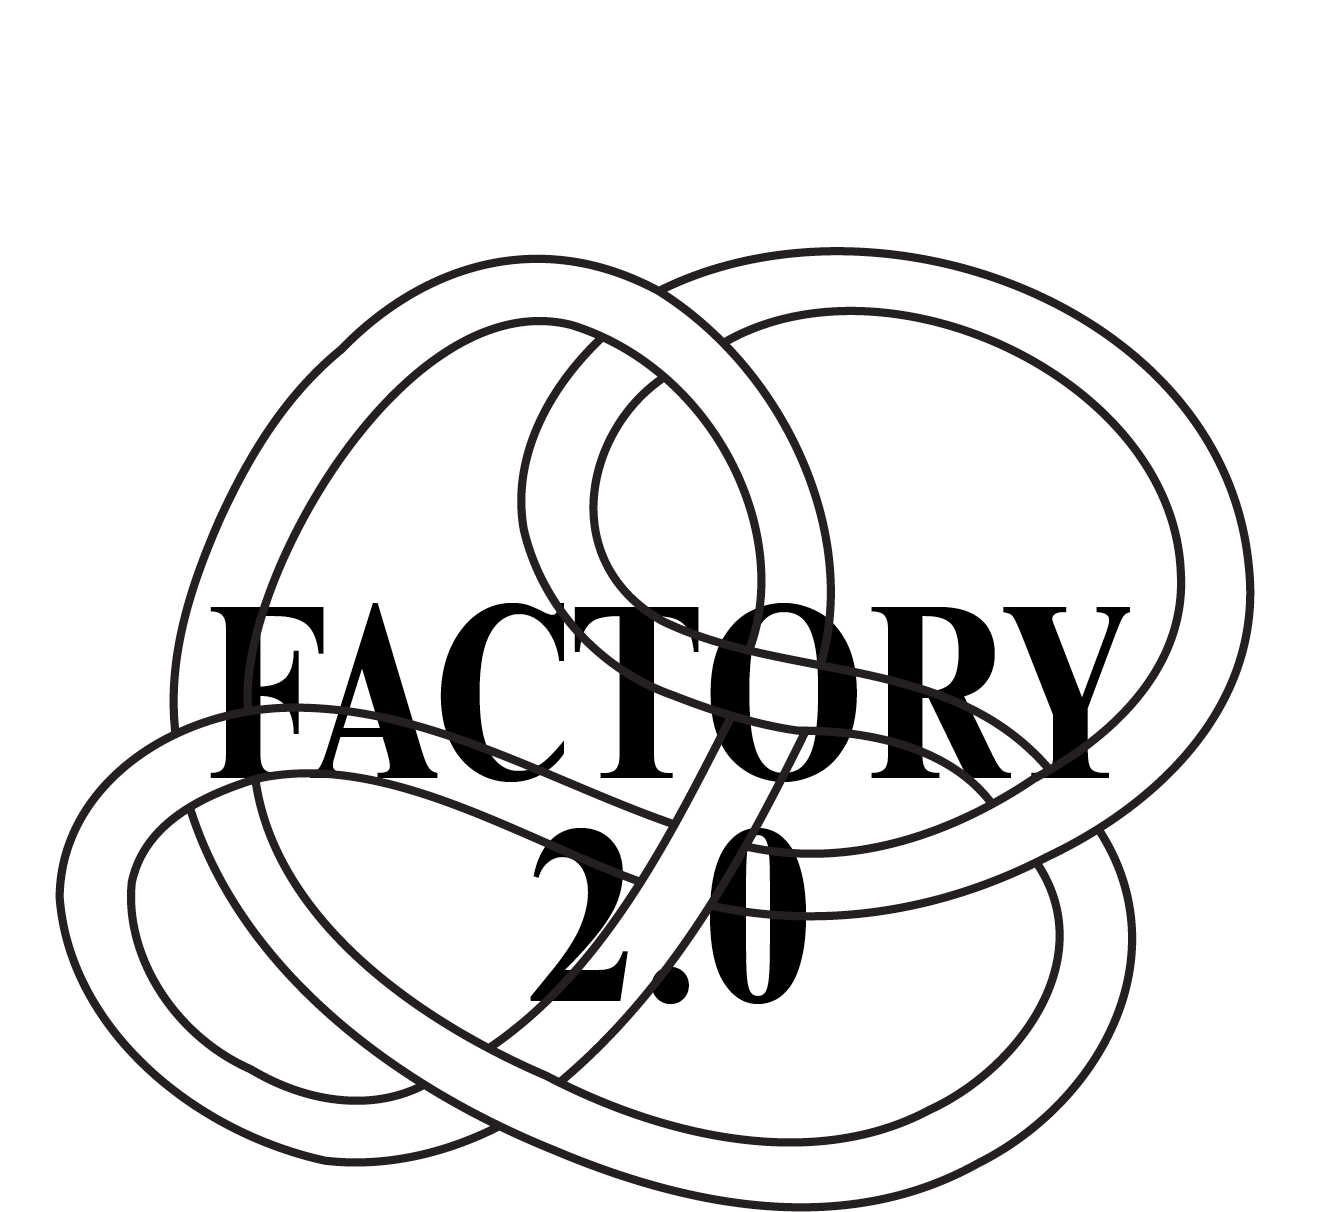 Factory 2.0 (logo)